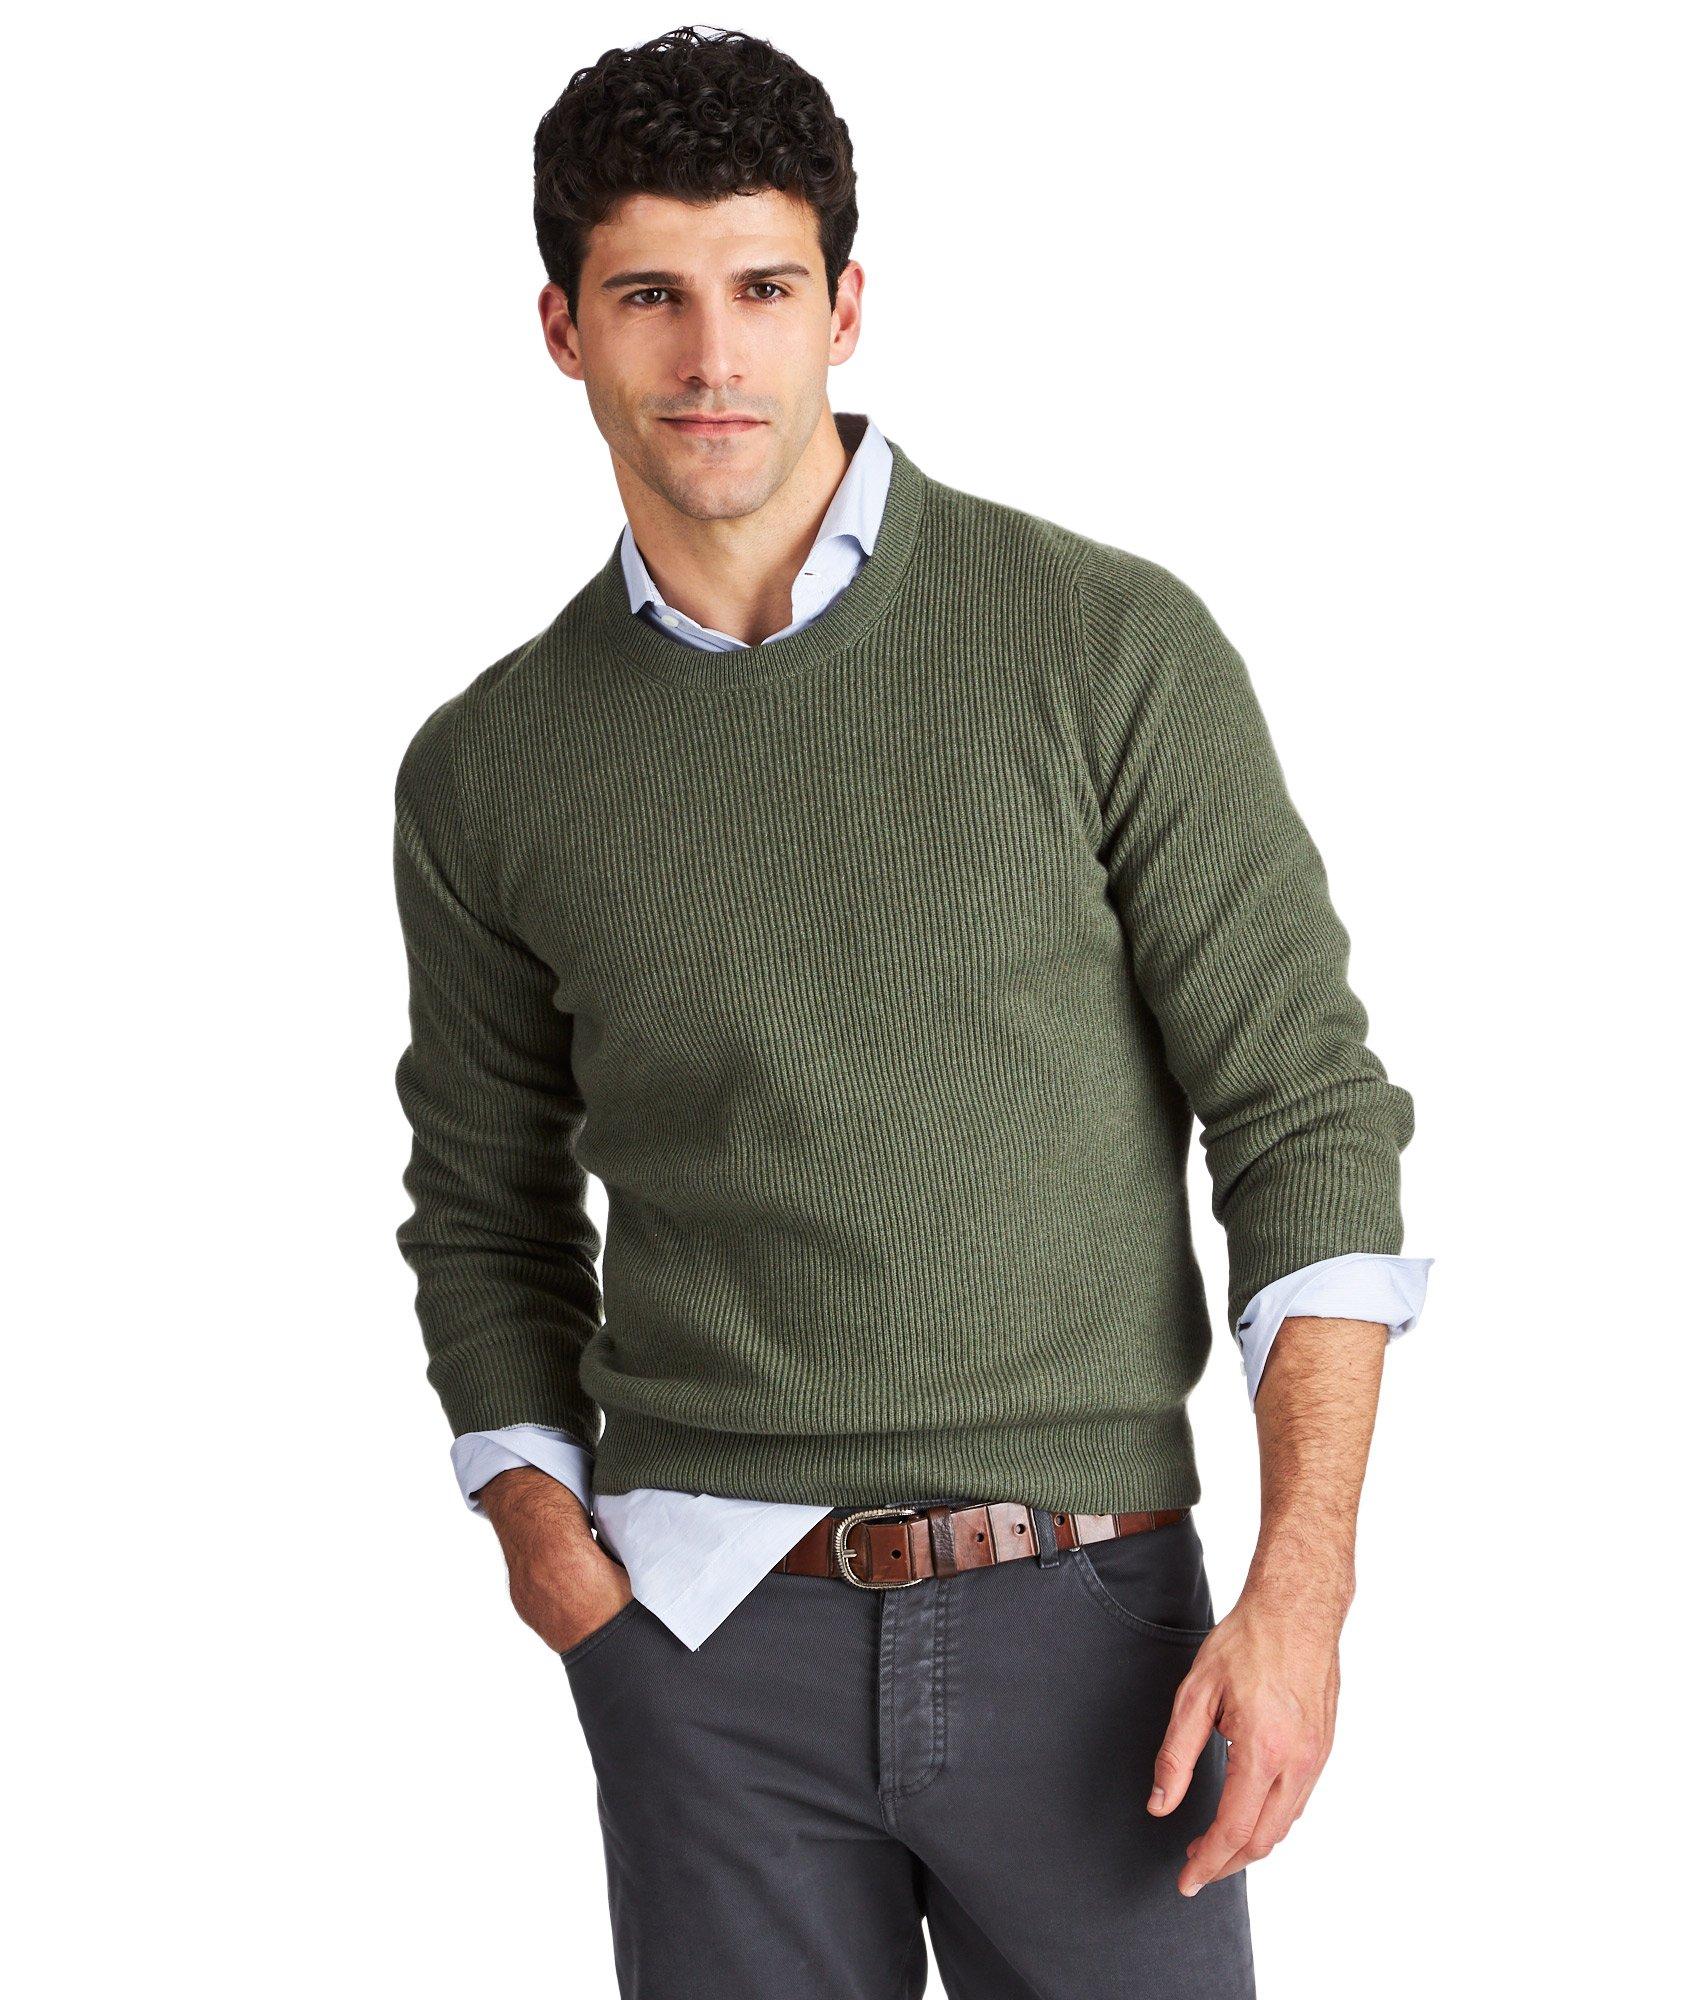 Wool, Cashmere & Silk Sweater image 0